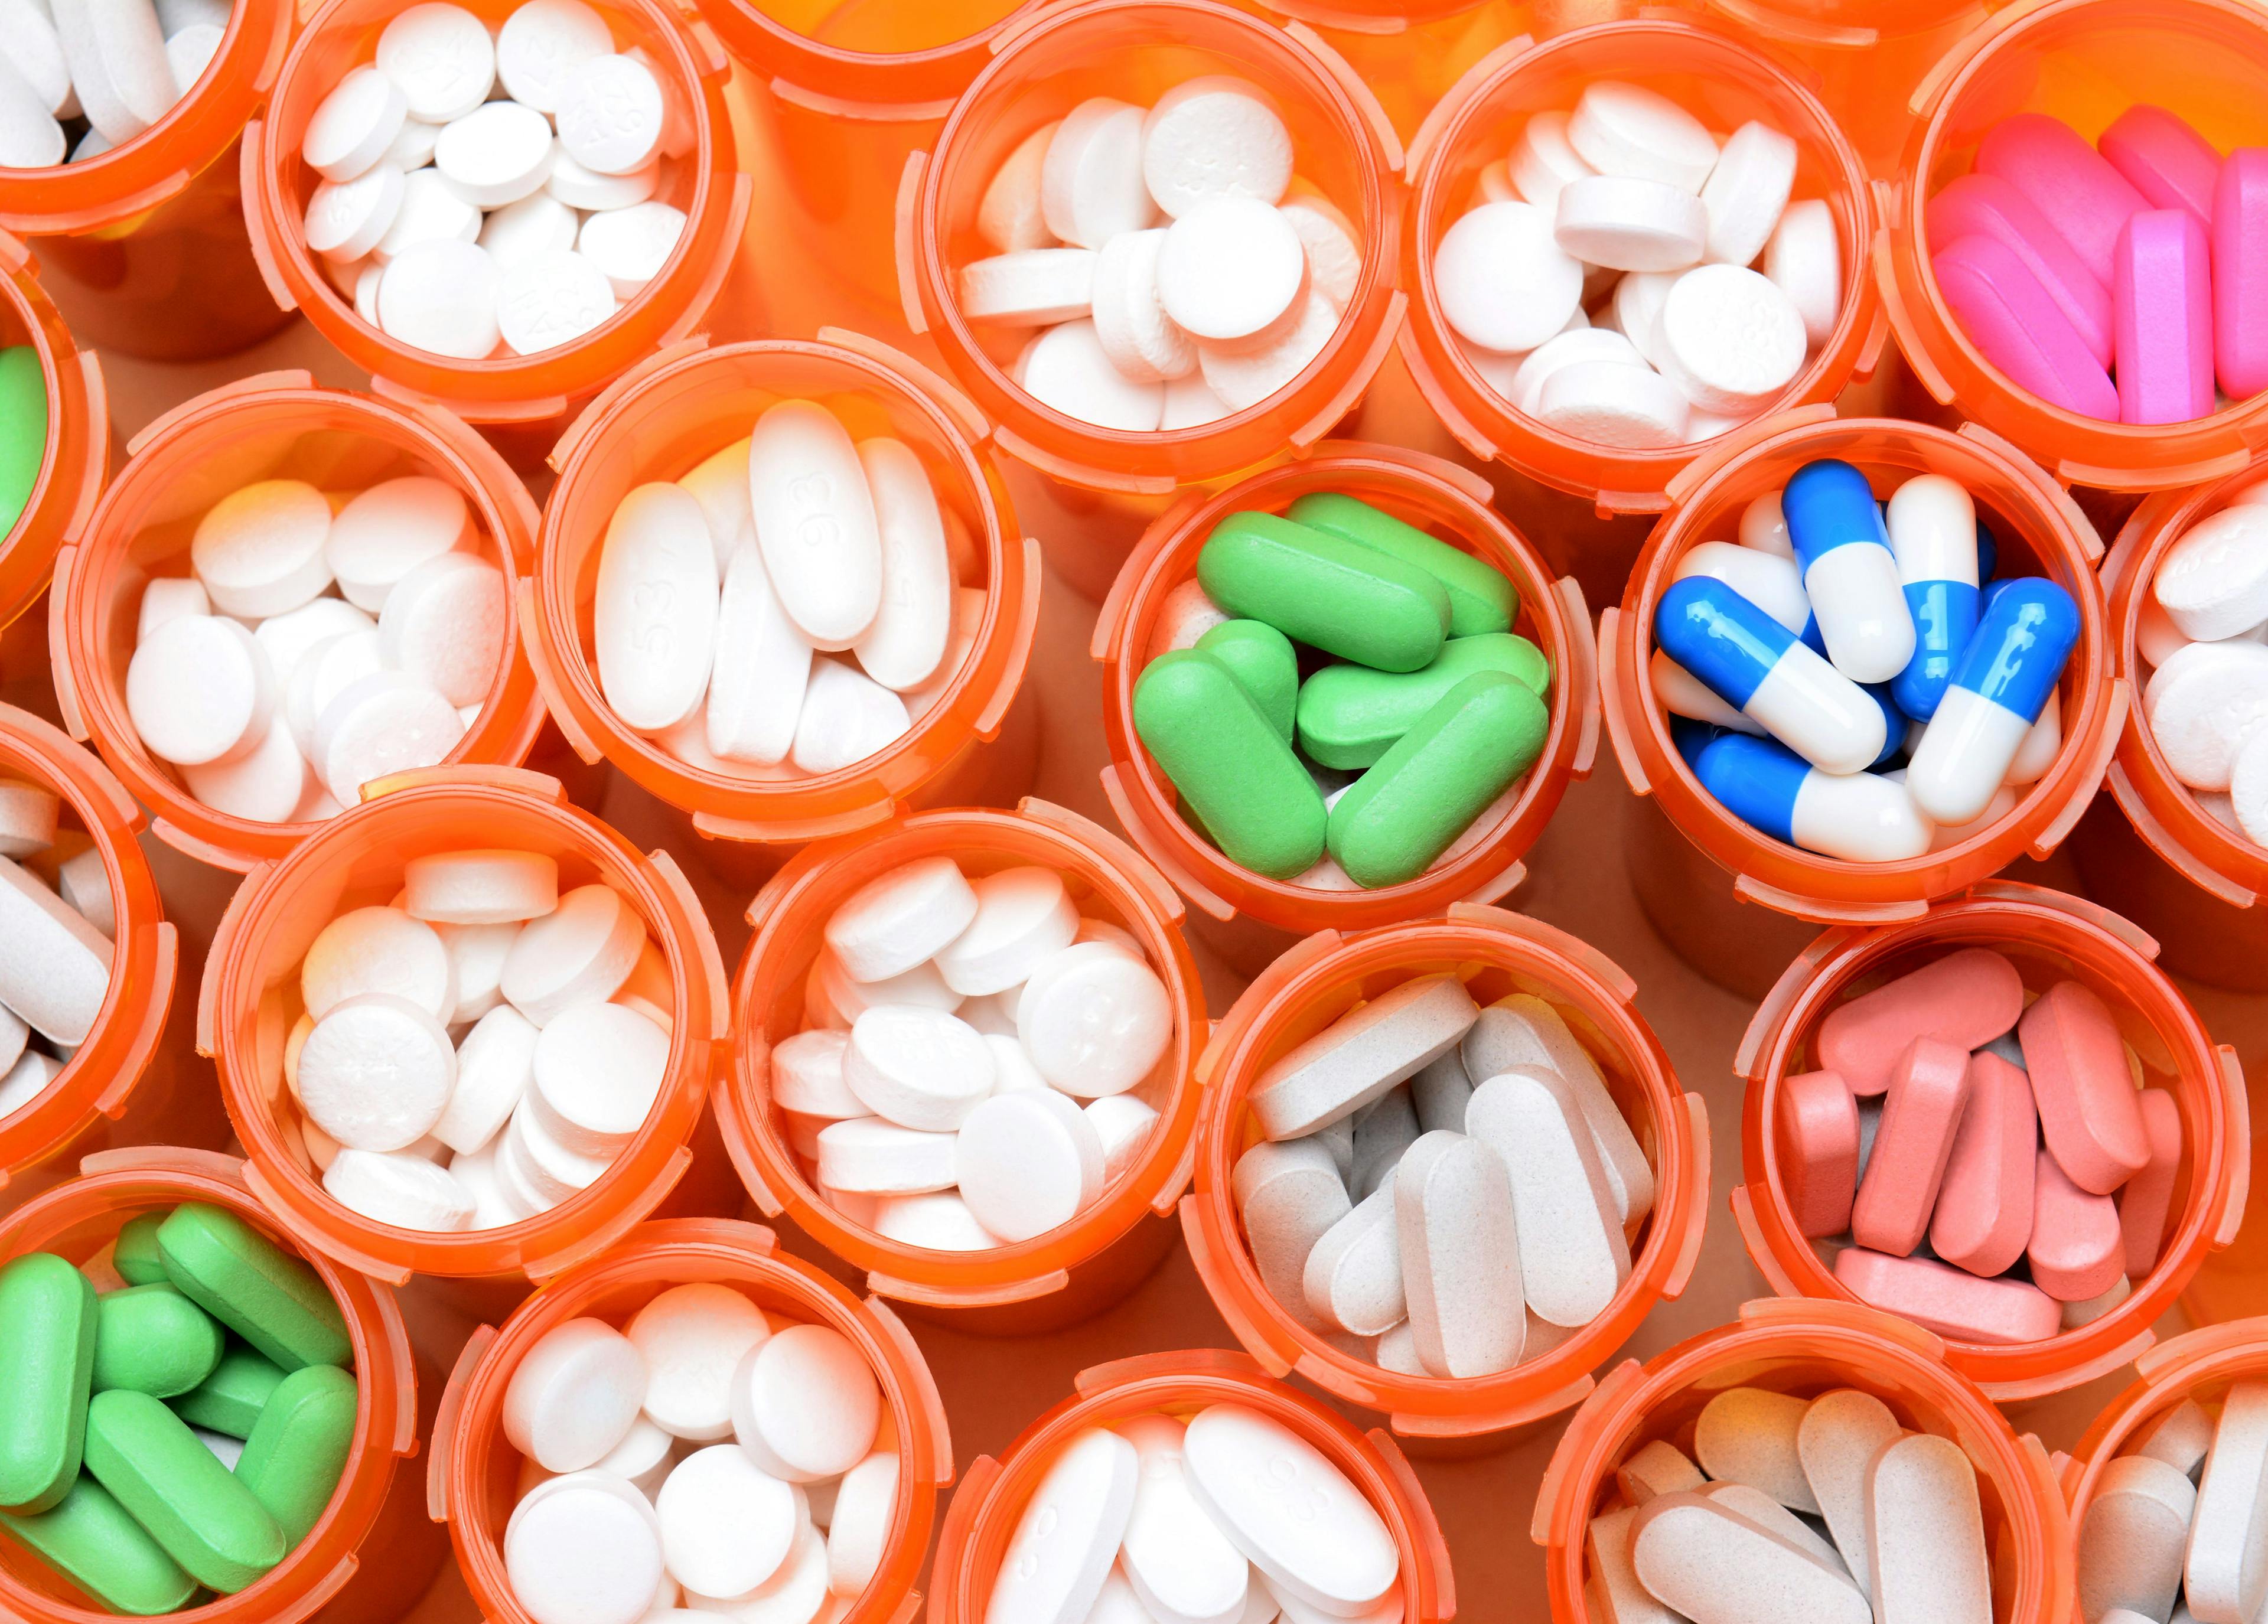 SmartRx Joins Other Prescription Drug Discount Programs